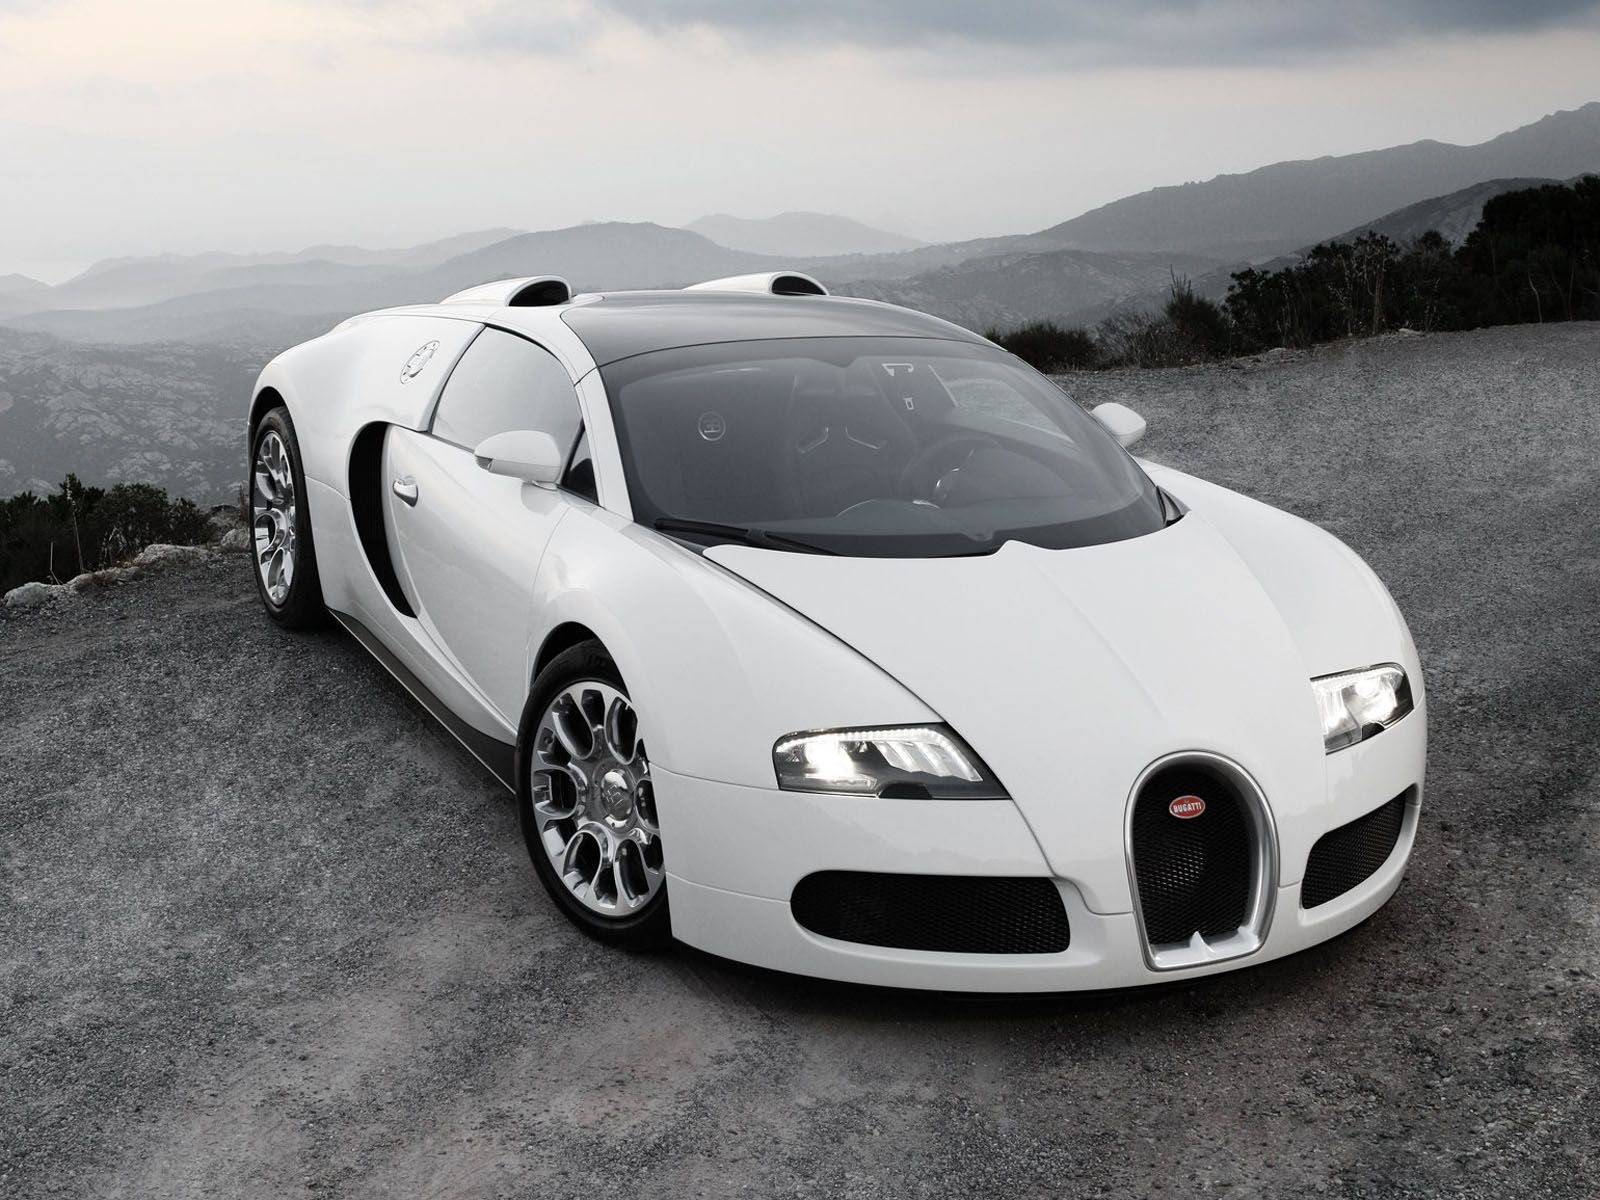 picture of bugatti veyron image. Bugatti veyron, Bugatti, Bugatti cars